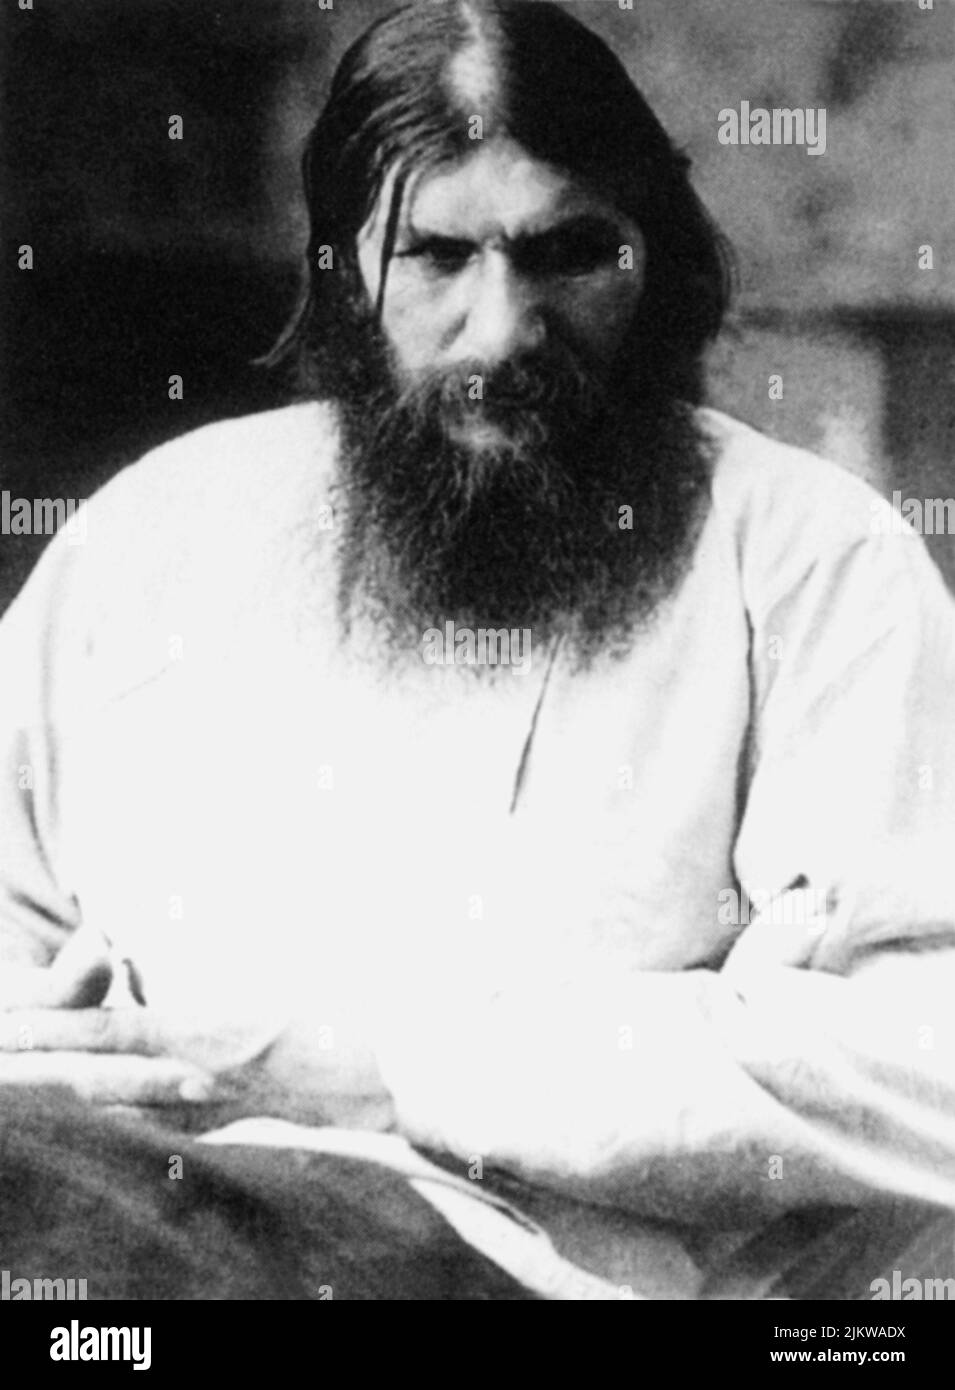 1914 : El célebre sacerdote ruso Grigorij Efimovic RASPUTÍN ( Pockrovskoe , Siberia 1871 - San Petersburgo 1916 ) - MAGO - MAGO - Prete - mónaco - retrato - ritratto - barba - barba - político - político - RASPOUTINE --- Archivio GBB Foto de stock